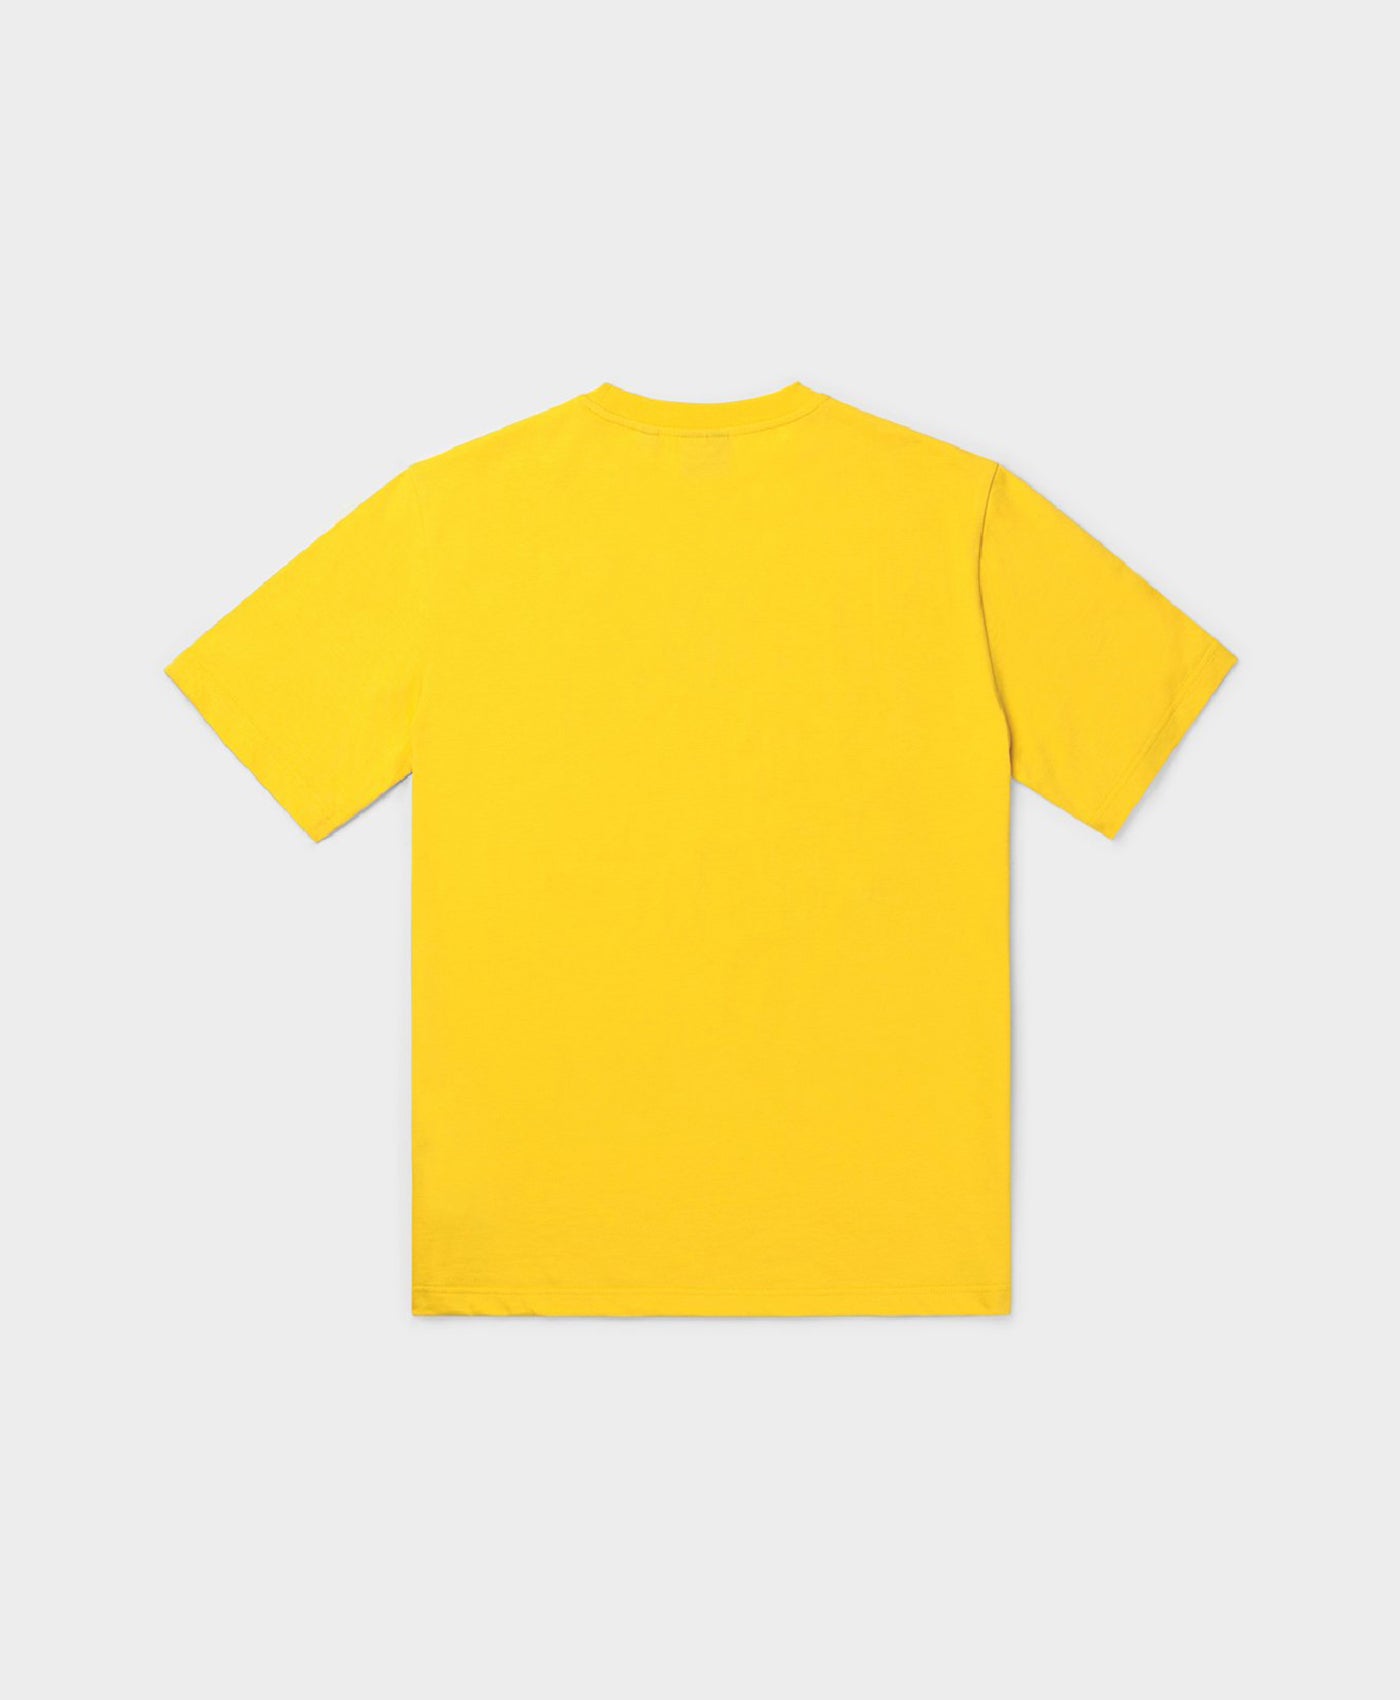 DP - Yellow Majid T-Shirt - Packshot - Rear